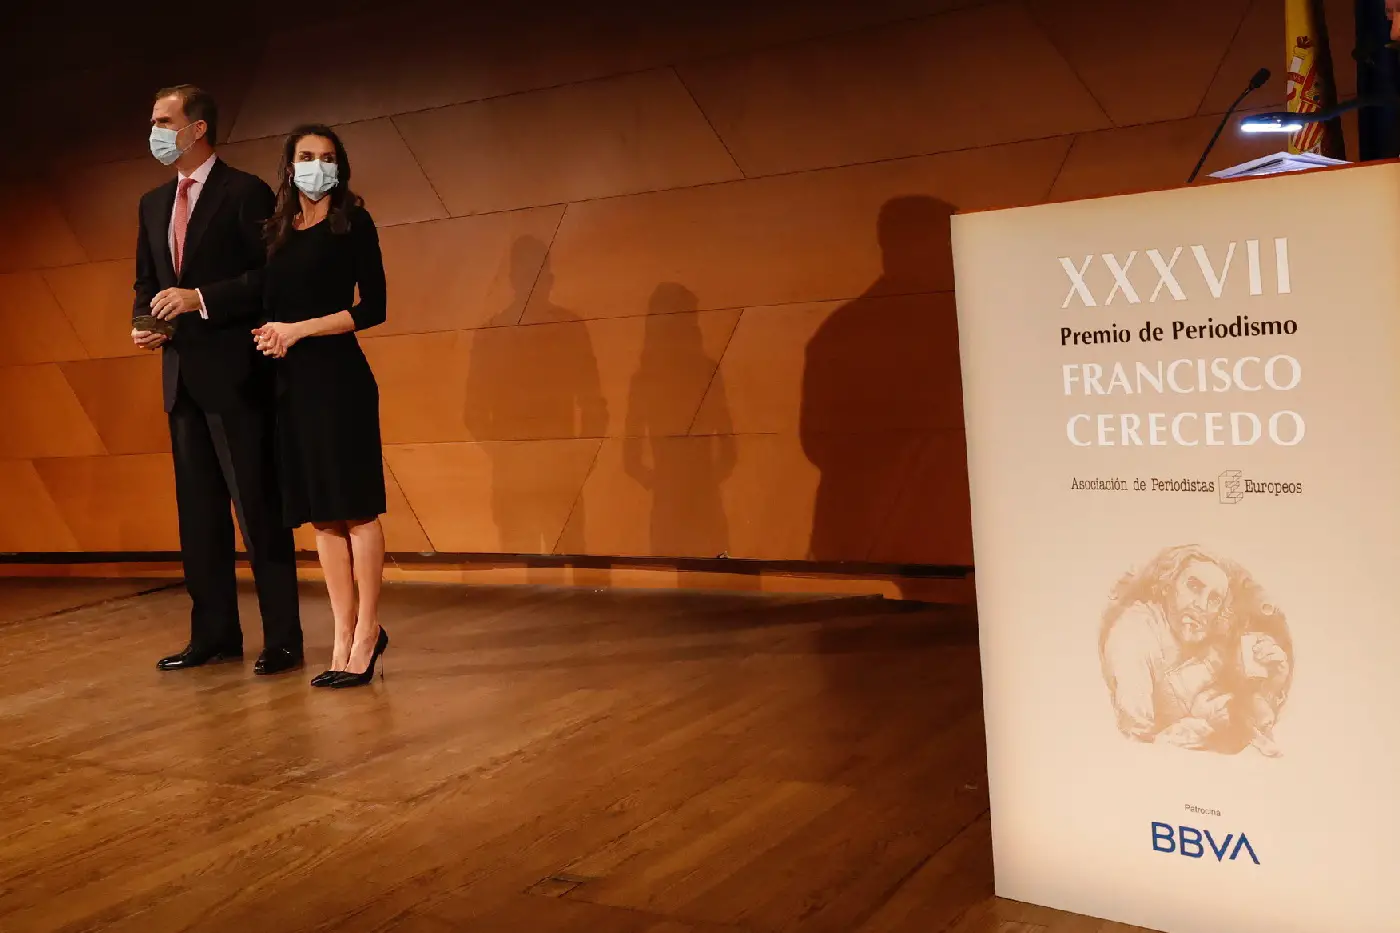 Queen Letizia wore Emporio Armani dress at Francisco Cerecedo Journalism Award